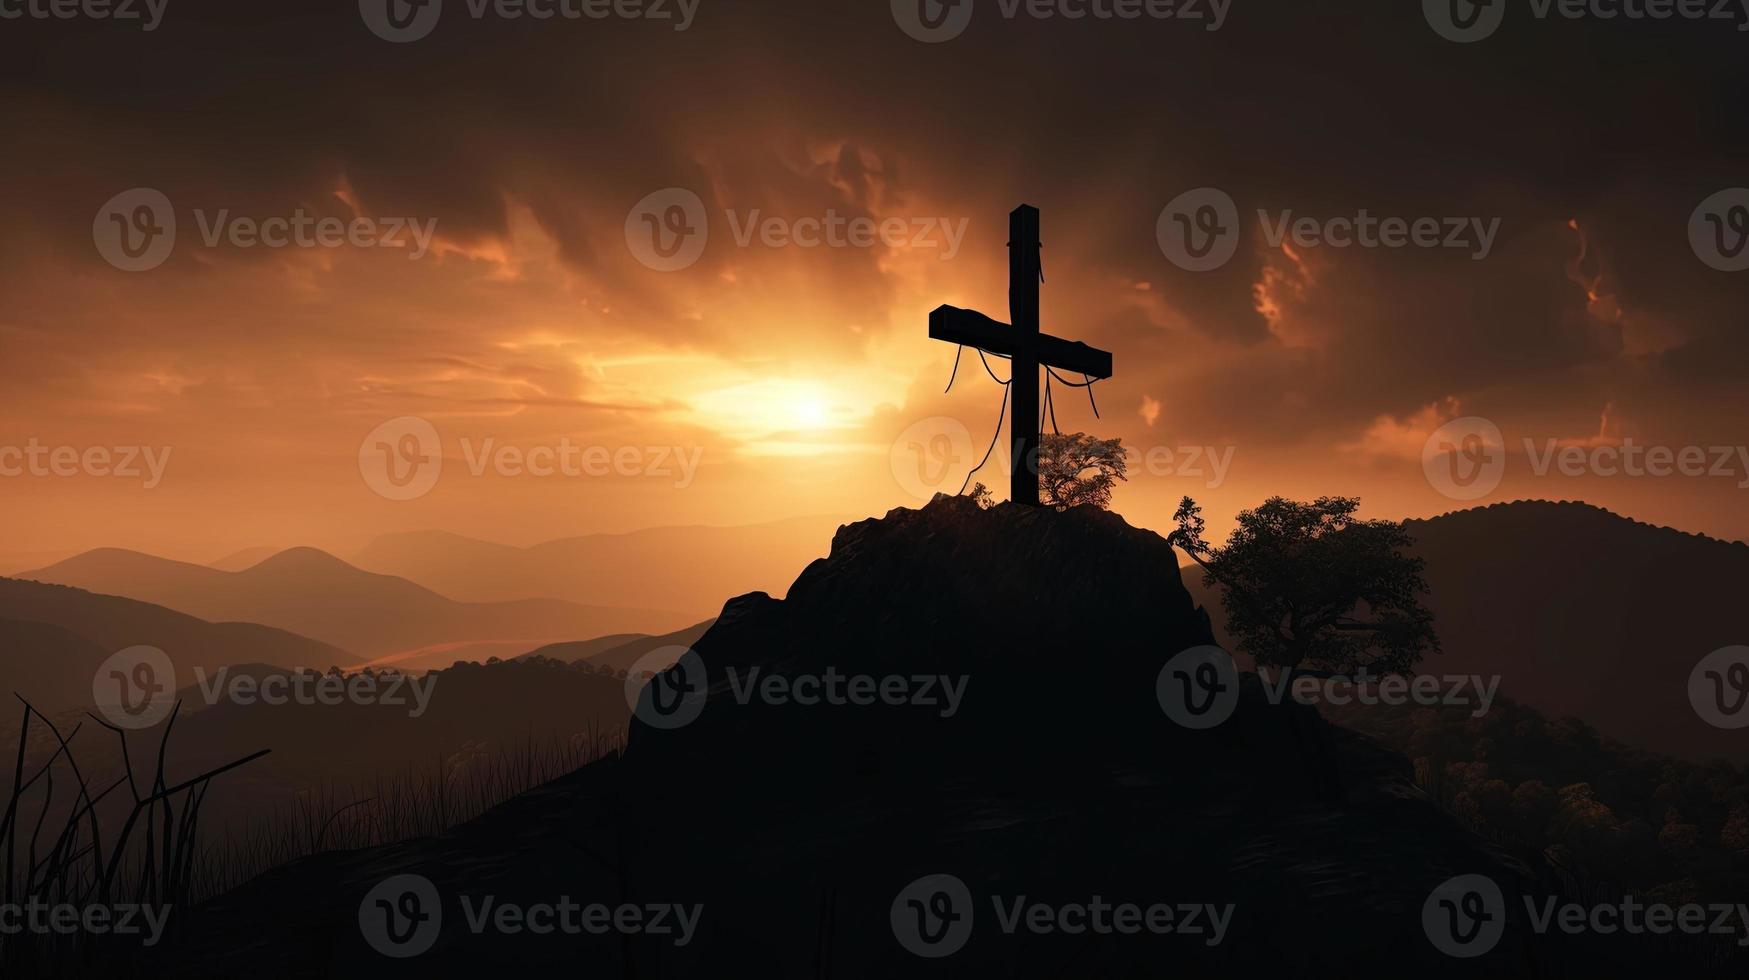 berg majesteit artistiek silhouet van kruisbeeld kruis tegen zonsondergang lucht foto